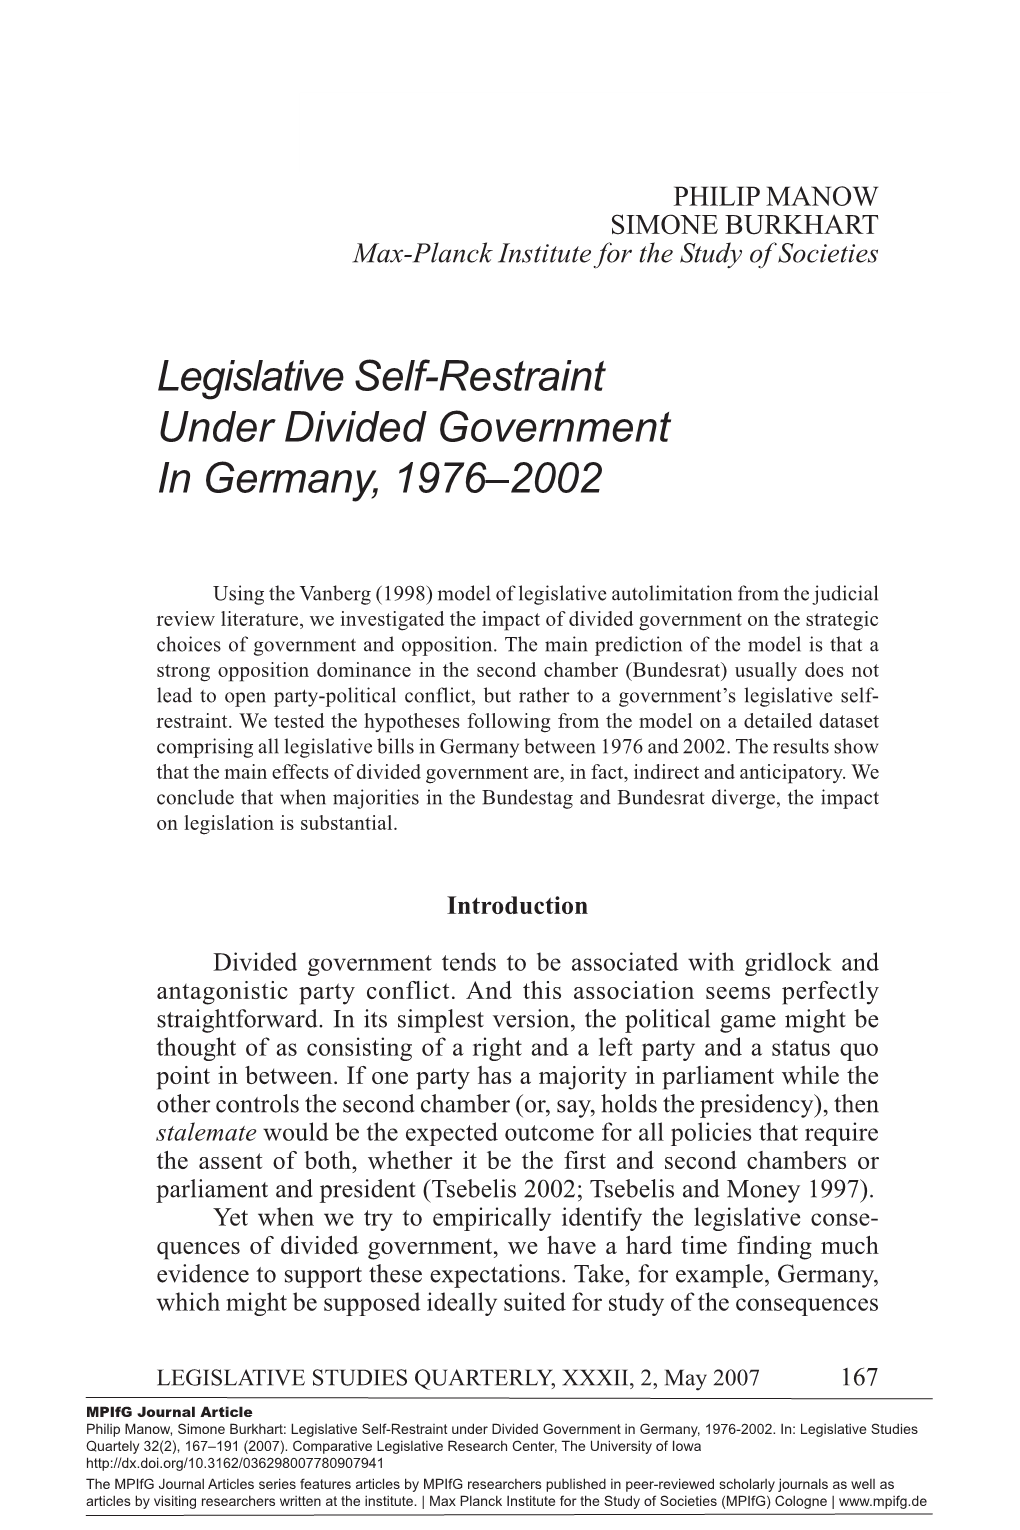 Legislative Self-Restraint Under Divided Government in Germany, 1976–2002